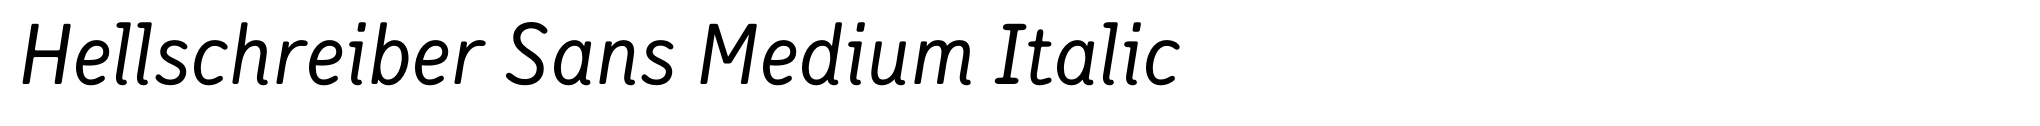 Hellschreiber Sans Medium Italic image